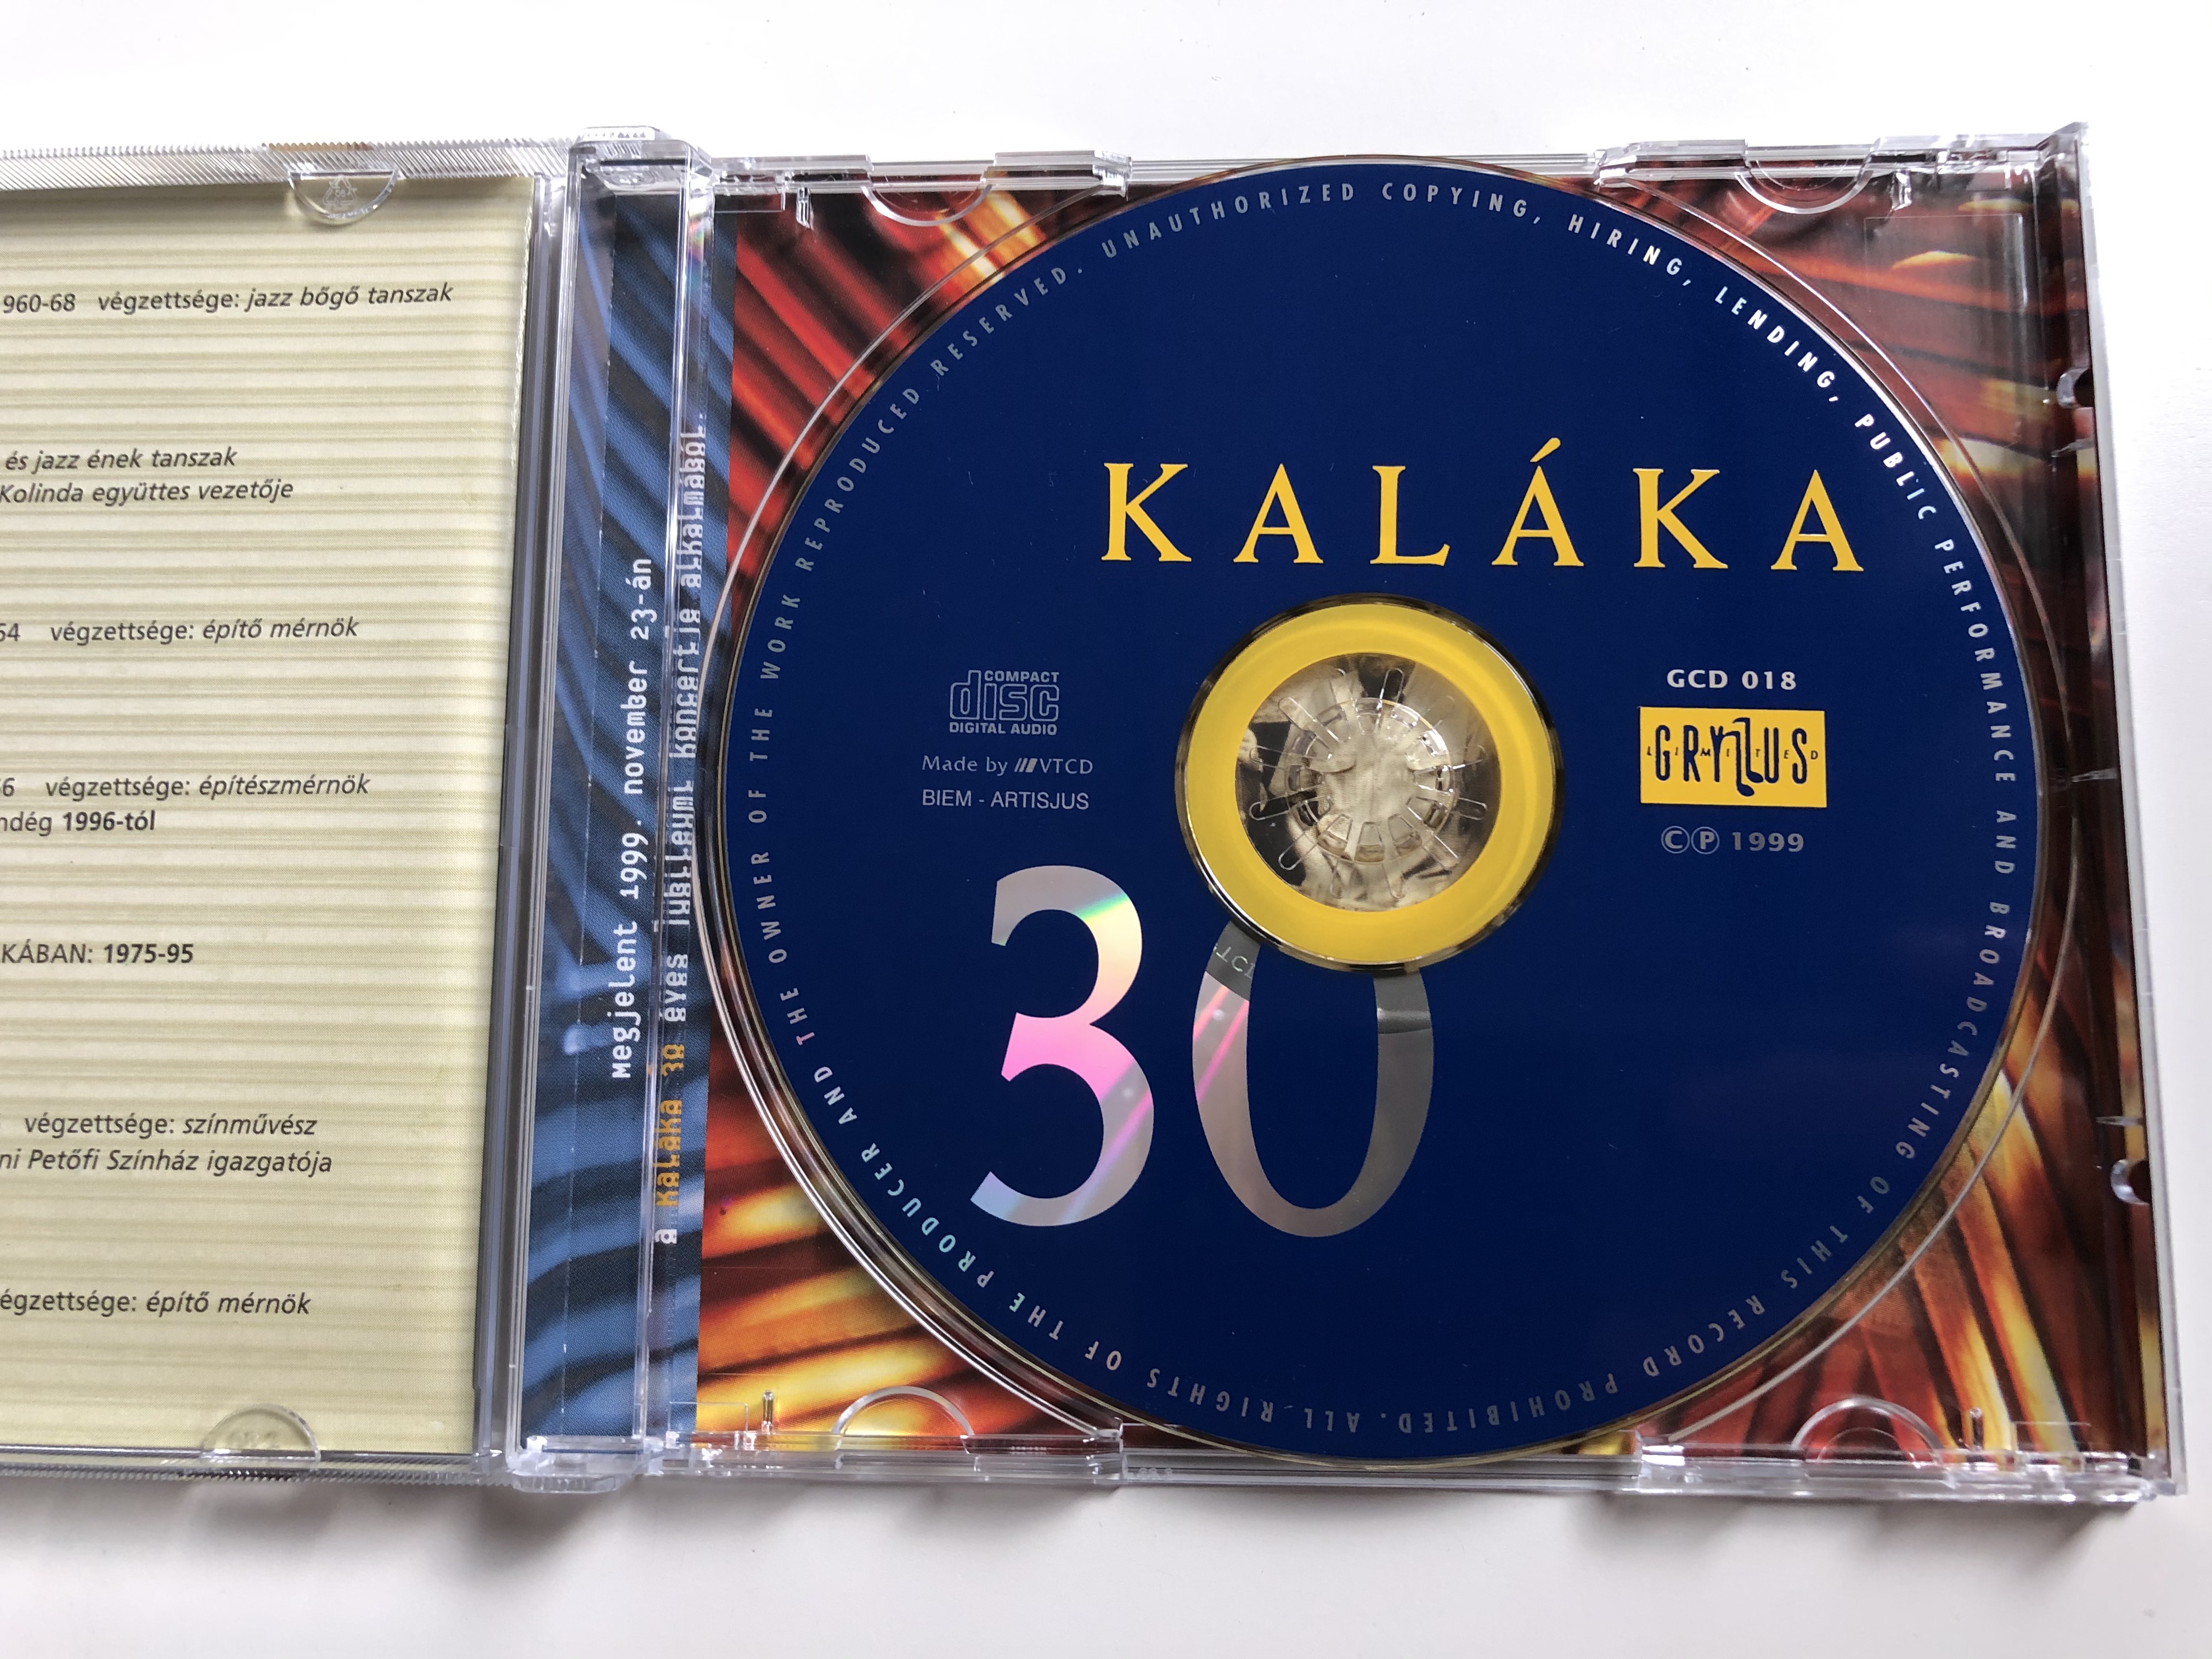 kal-ka-30-gryllus-audio-cd-1999-gcd-018-4-.jpg